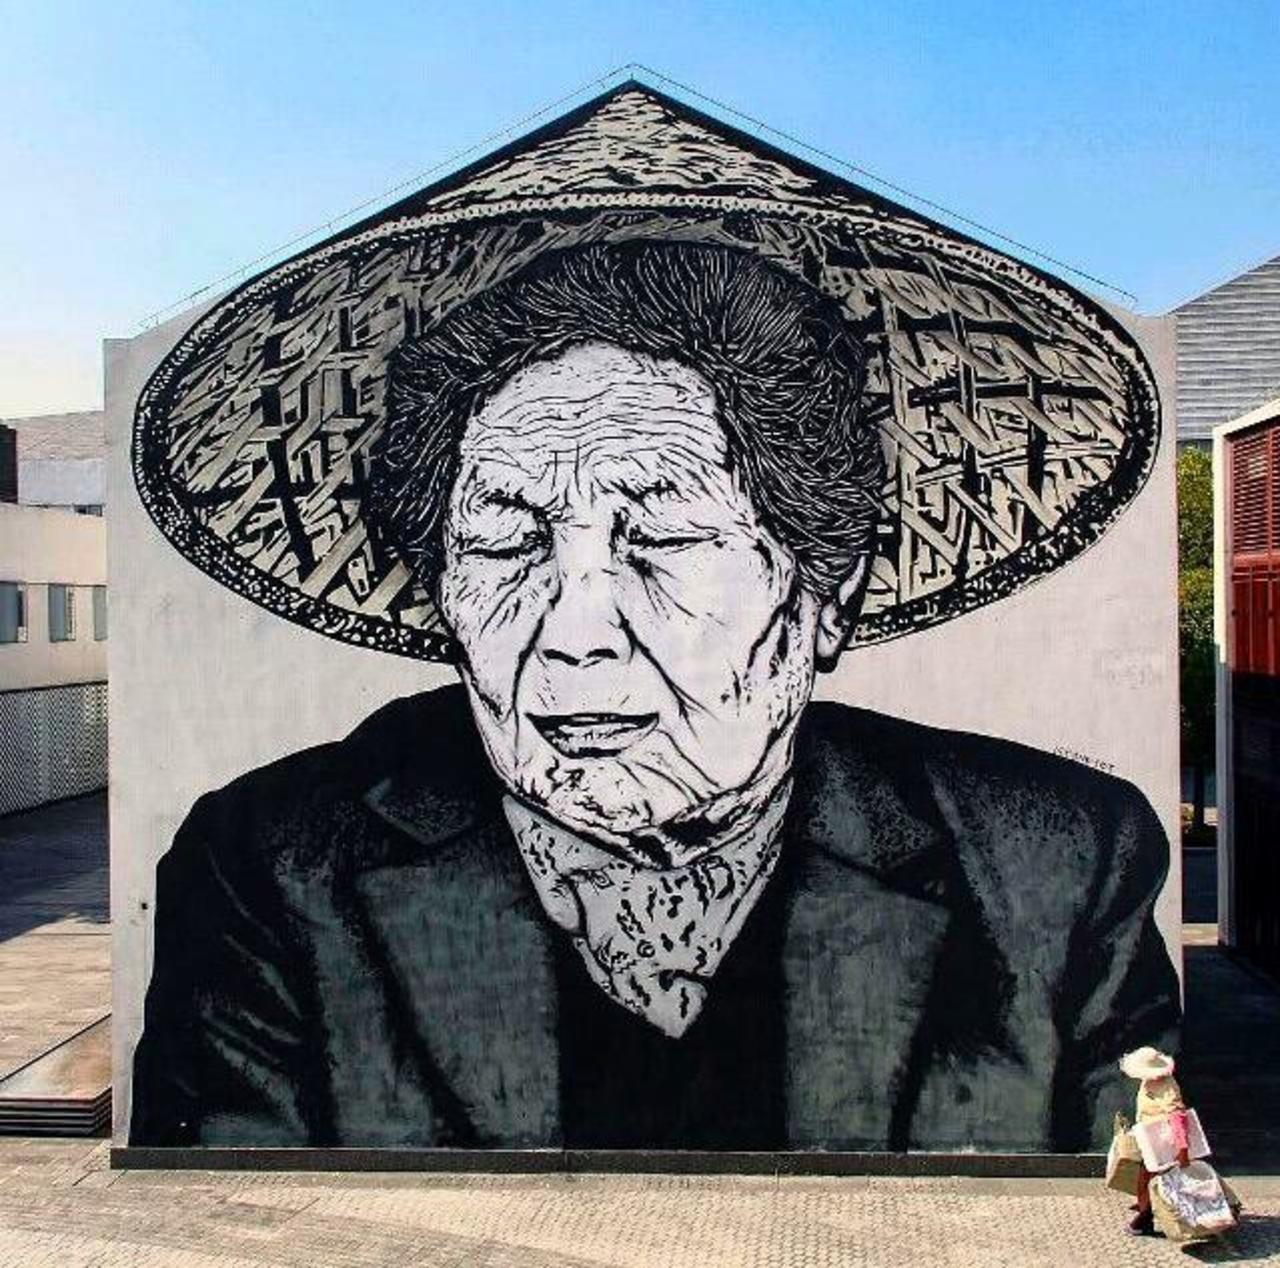 New Street Art by icy&sot in Shanghai  

#art #graffiti #mural #streetart http://t.co/M766rFAFEp